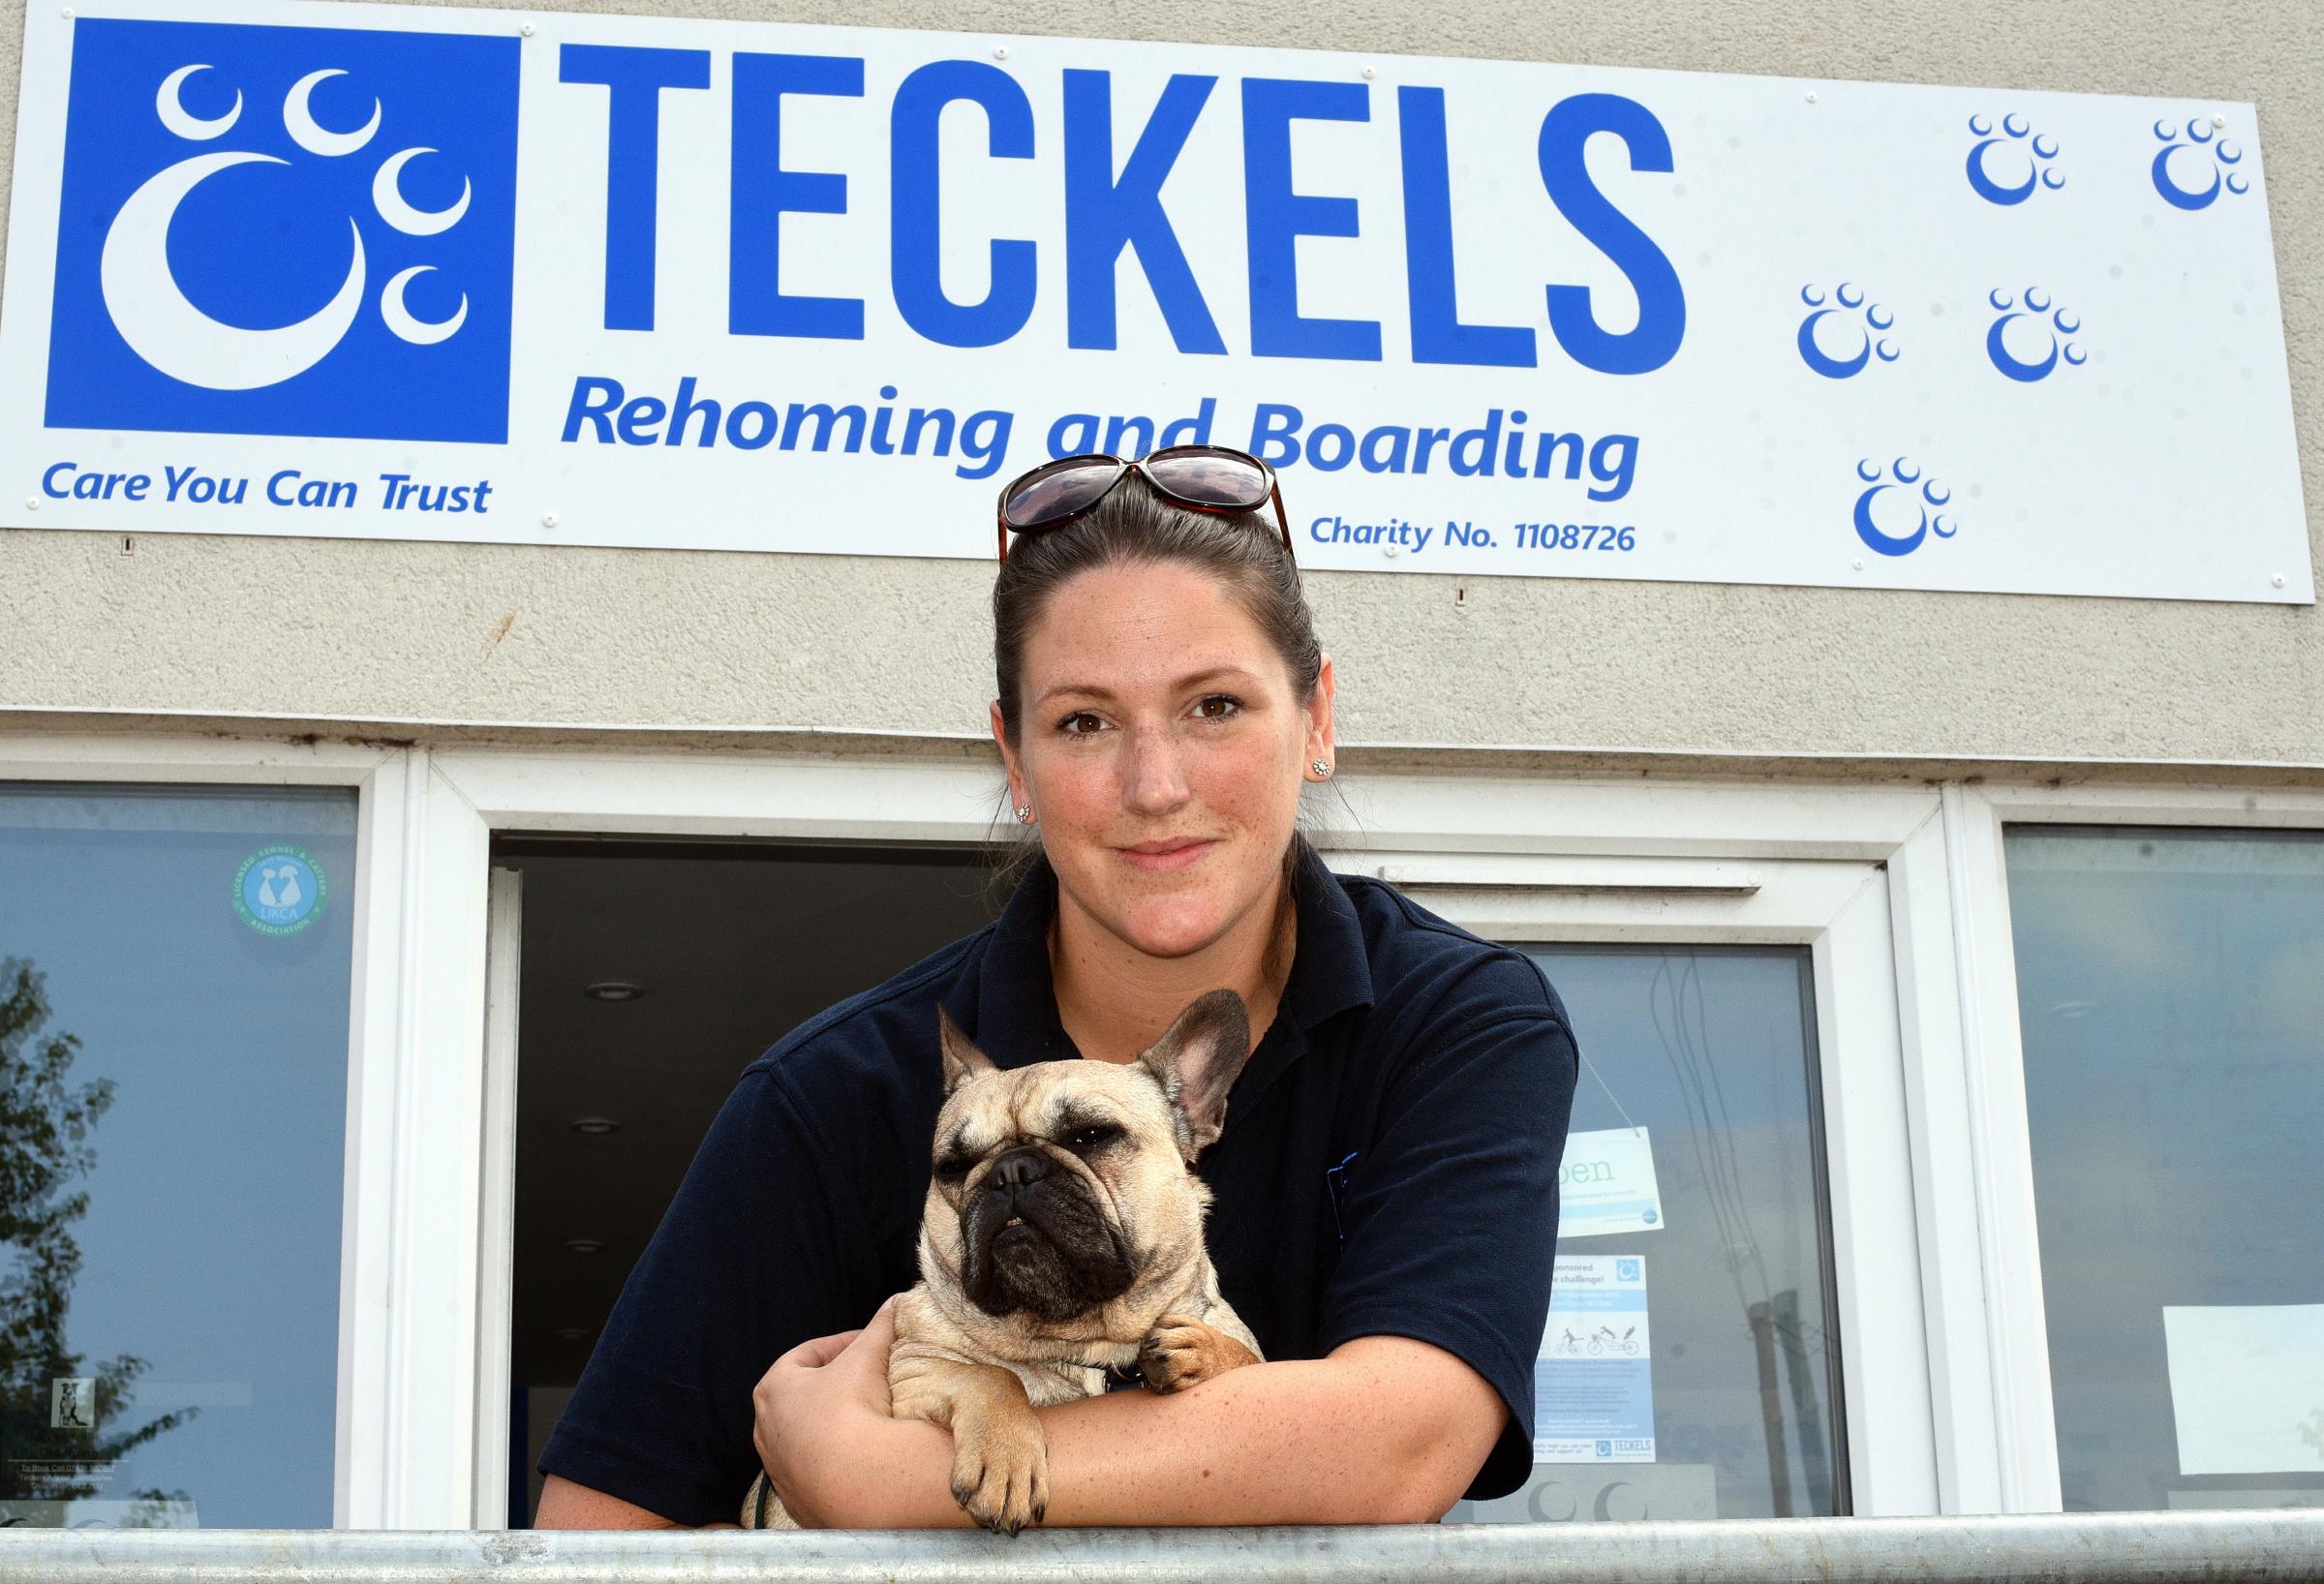 teckels dog rescue